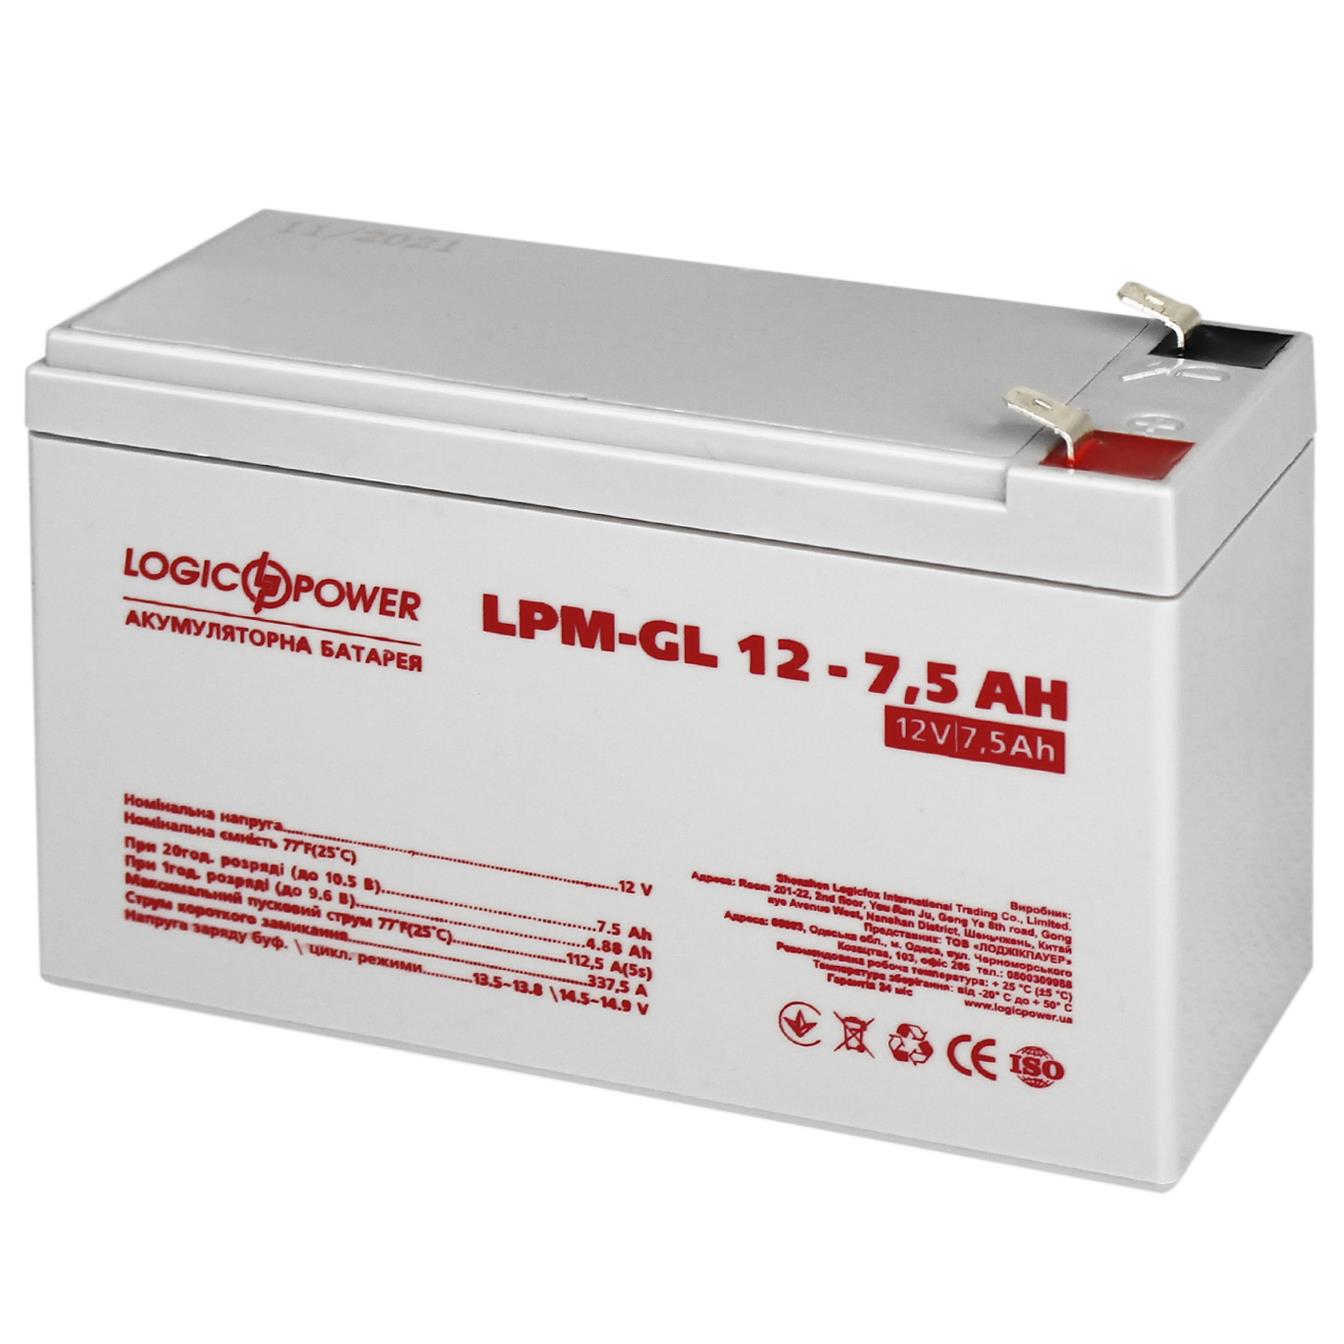 Характеристики акумулятор гелевий LogicPower LPM-GL 12V - 7.5 Ah (6562)